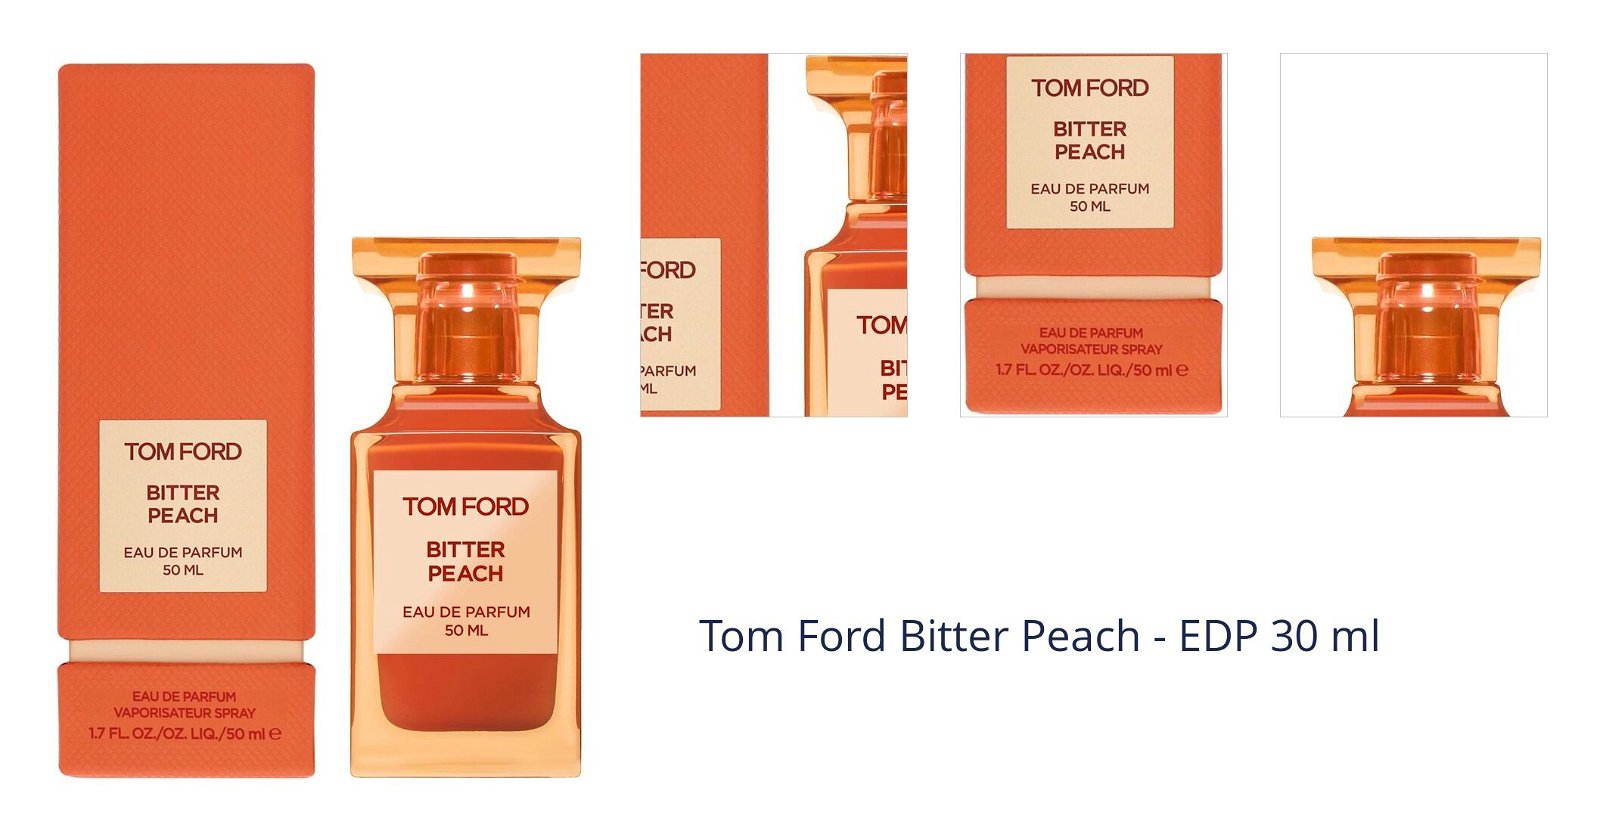 Tom Ford Bitter Peach - EDP 30 ml 1